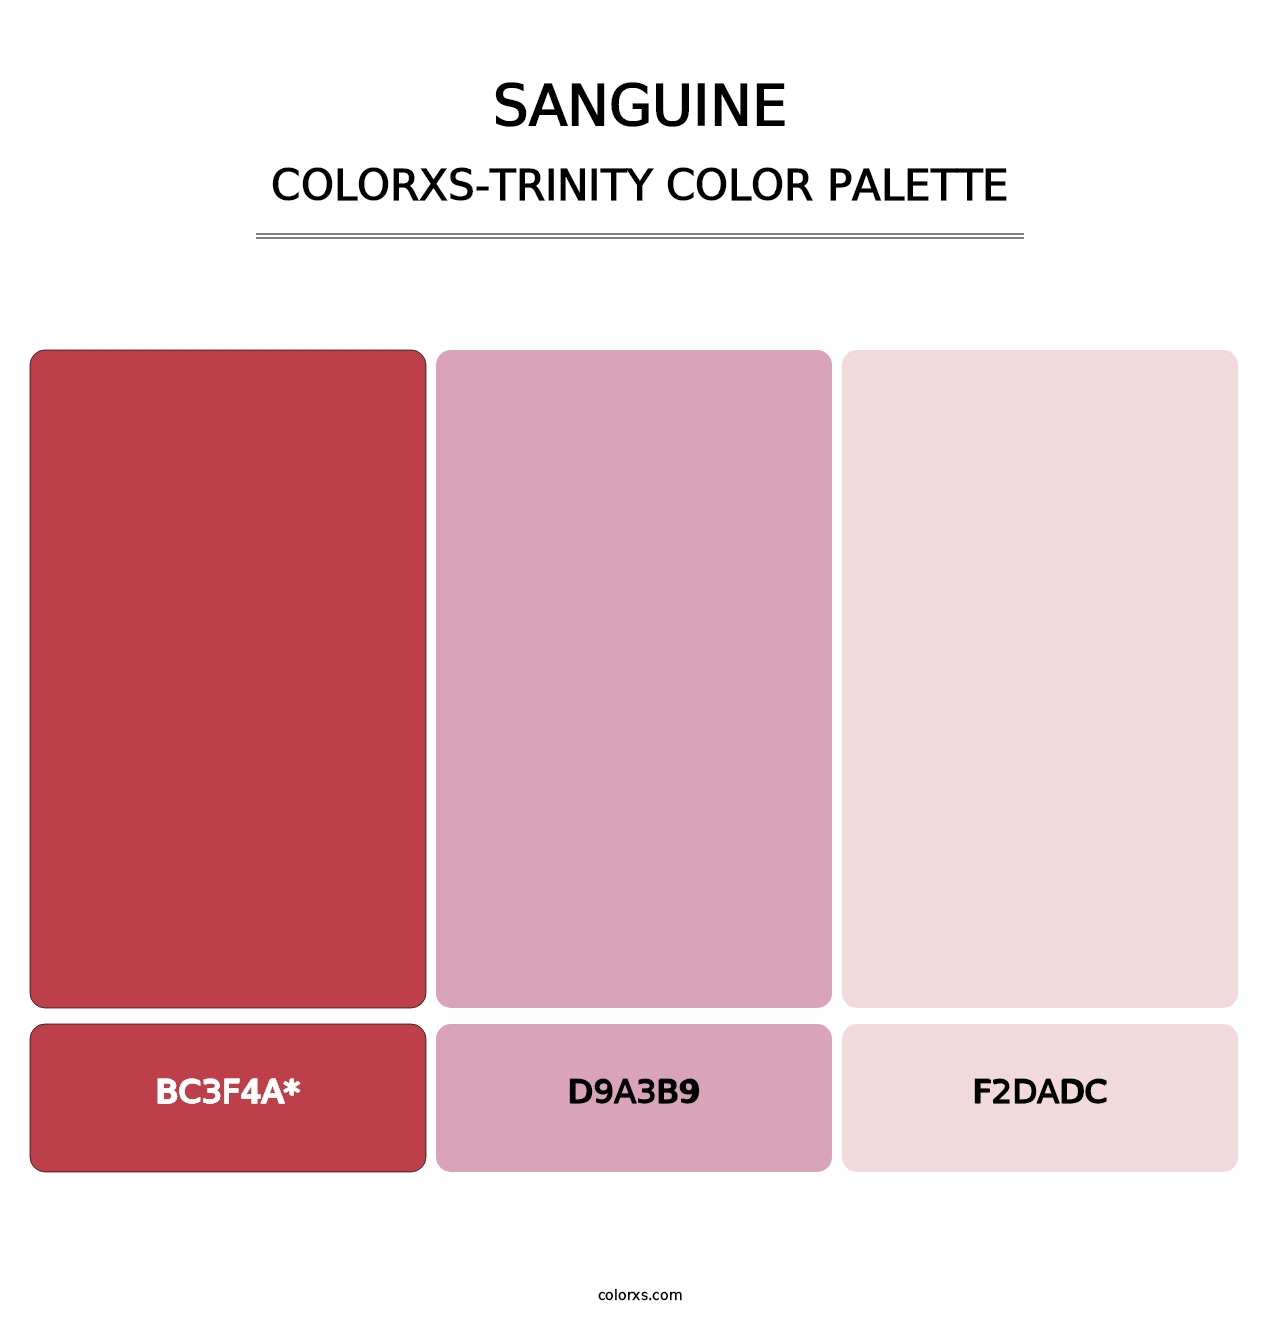 Sanguine - Colorxs Trinity Palette